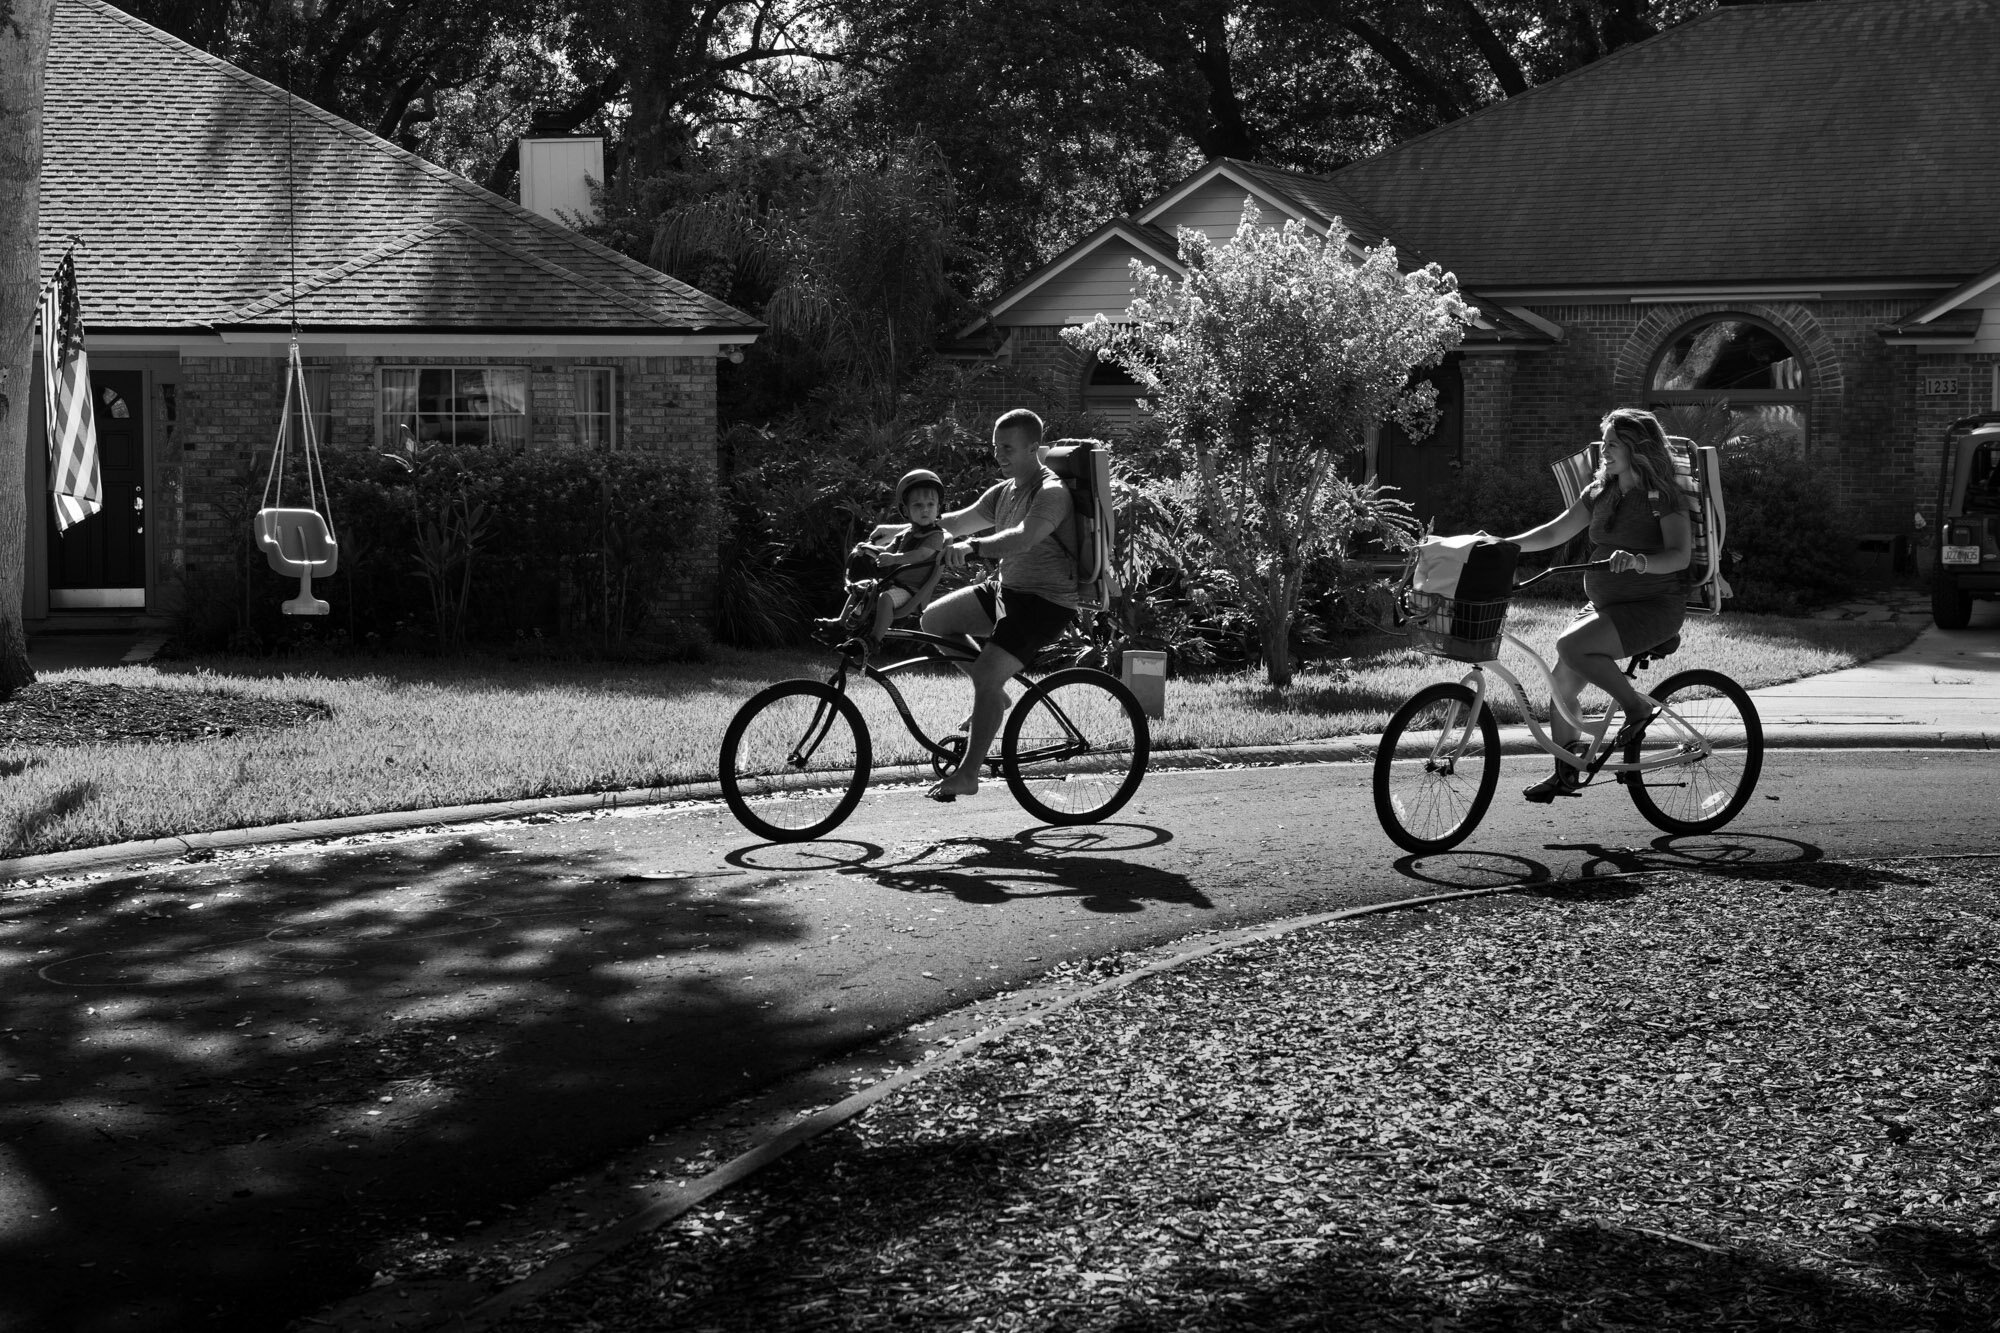 jacksonville beach family riding bikes